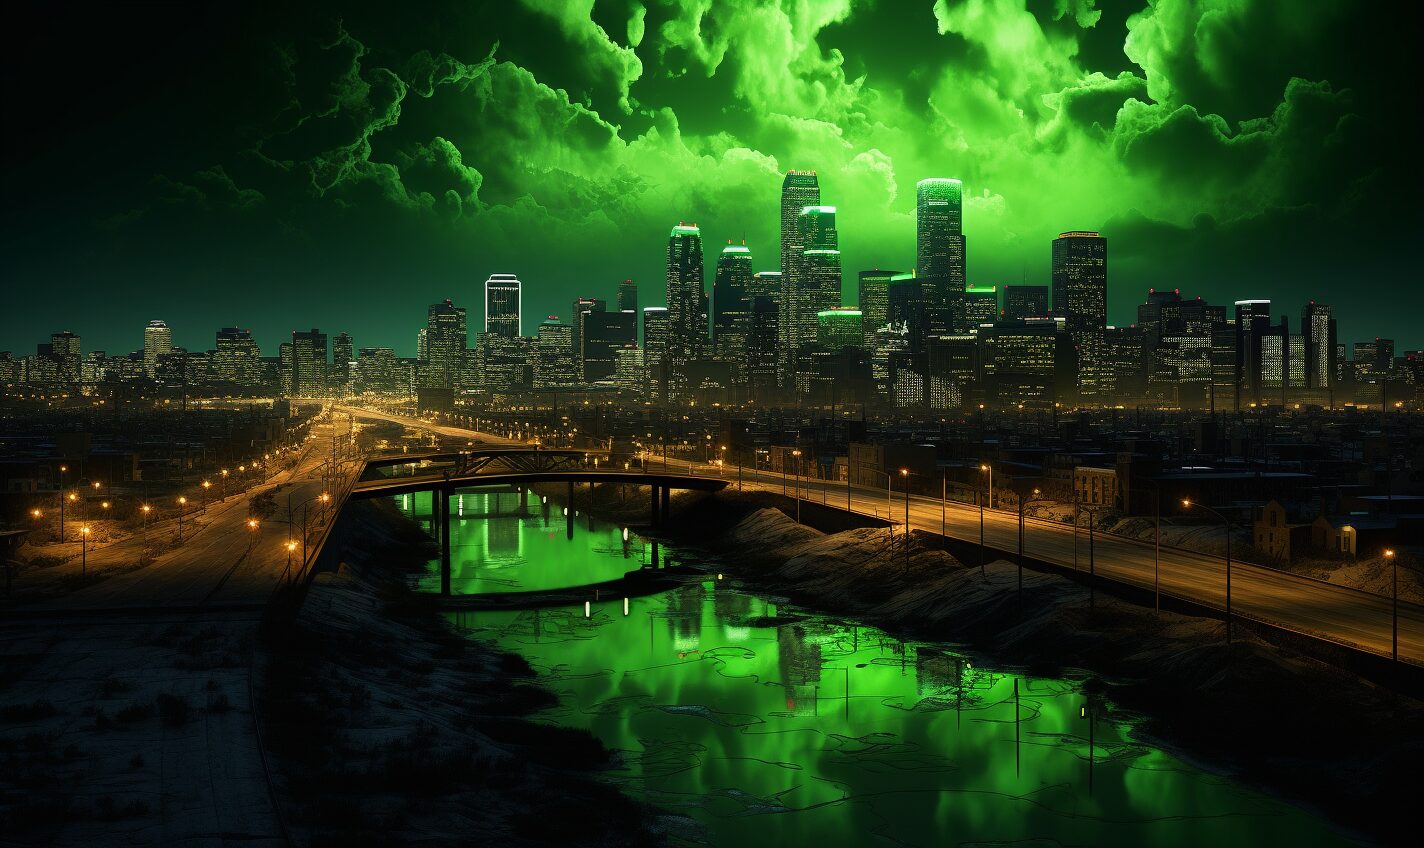 oklahoma city, oklahoma in black and neon green glow